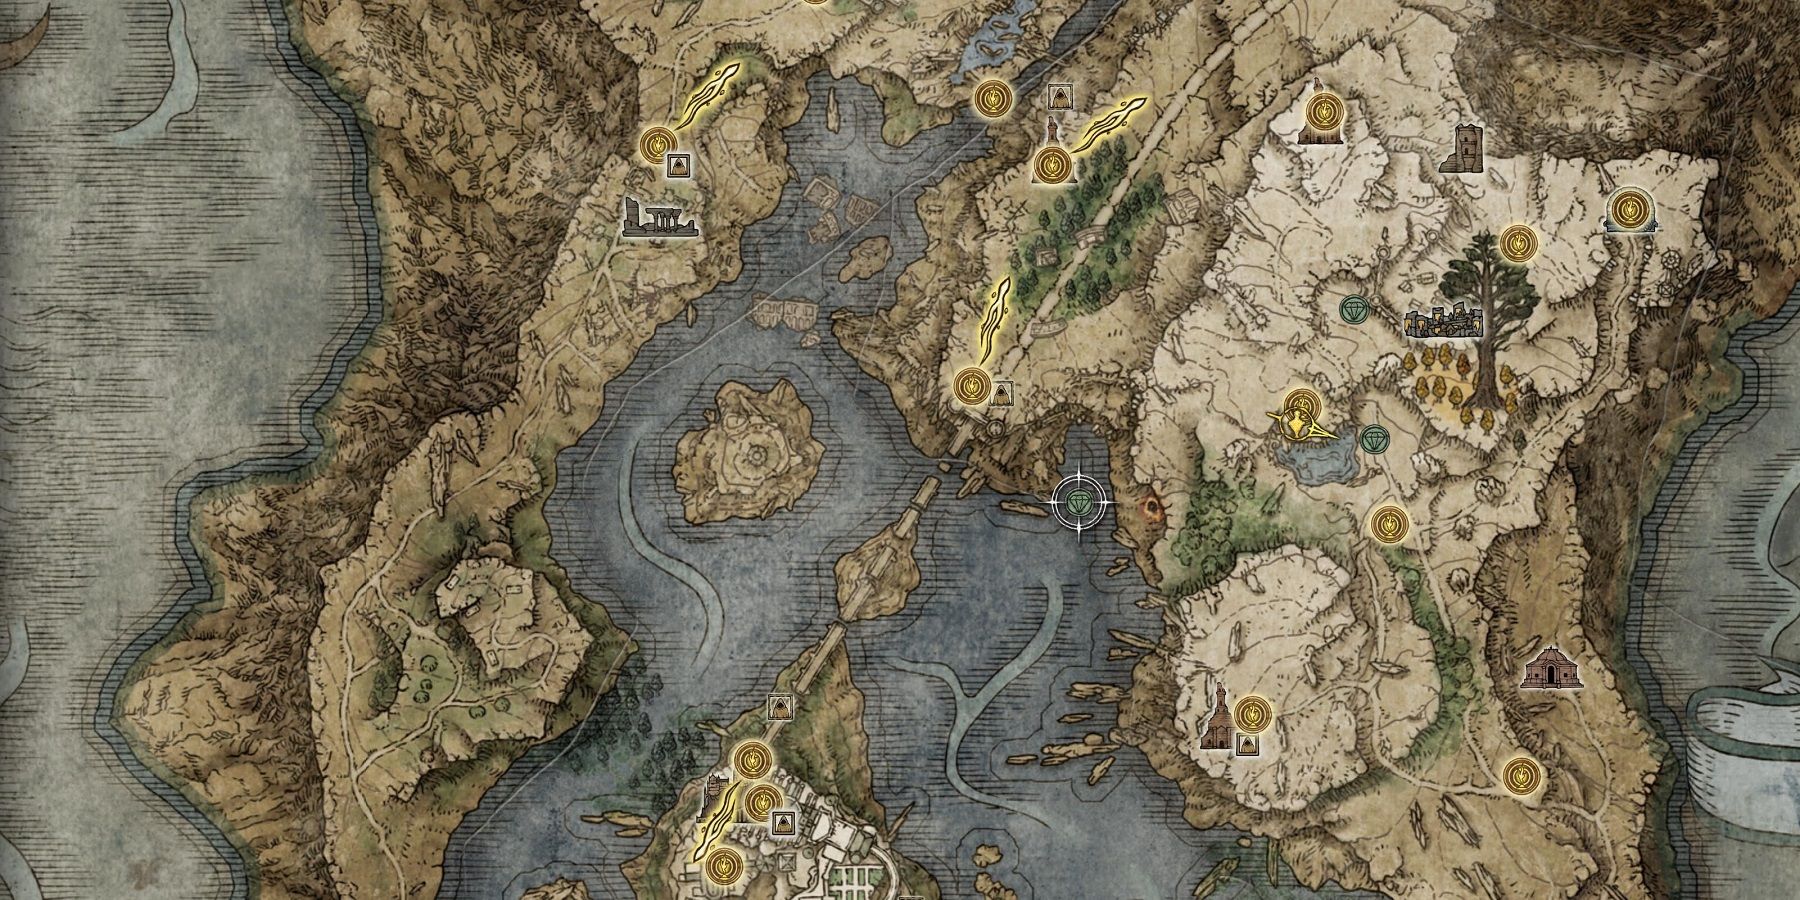 Elden Ring Liurnia of the Lakes map